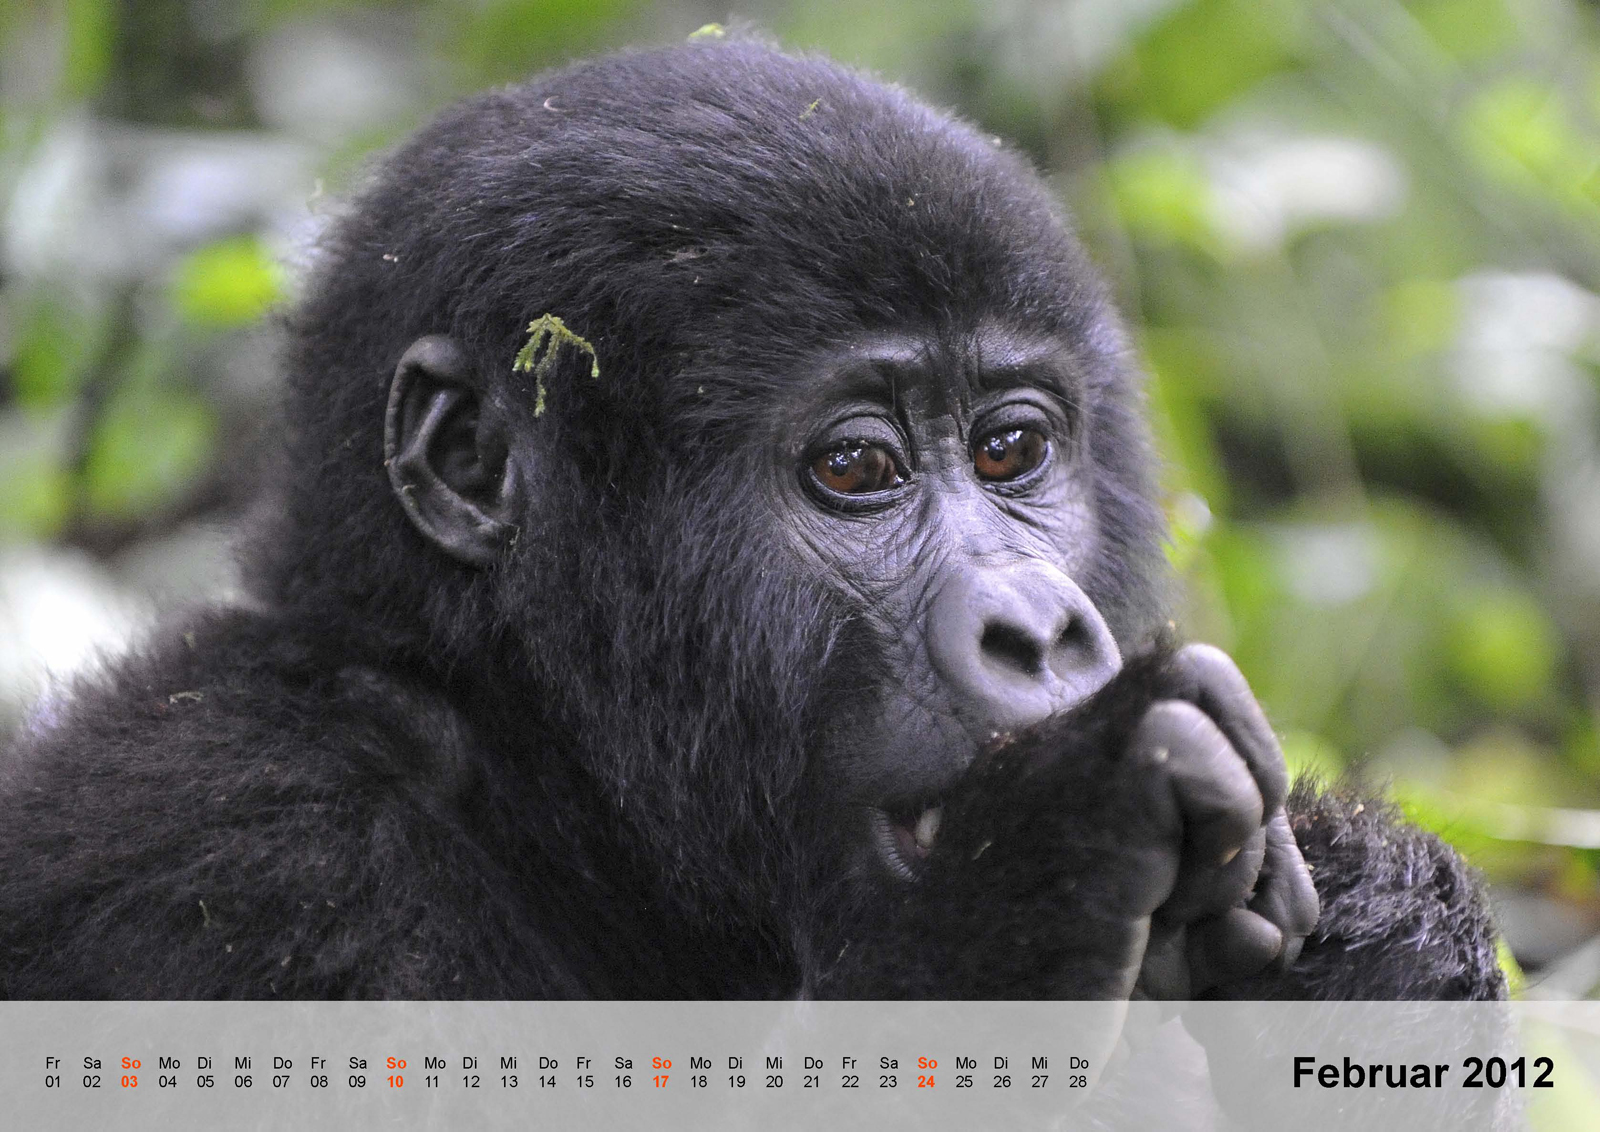 Berggorilla | Mountain gorilla | Bwindi Impenetrable National Park | Uganda - Kalender 2012 - Februar